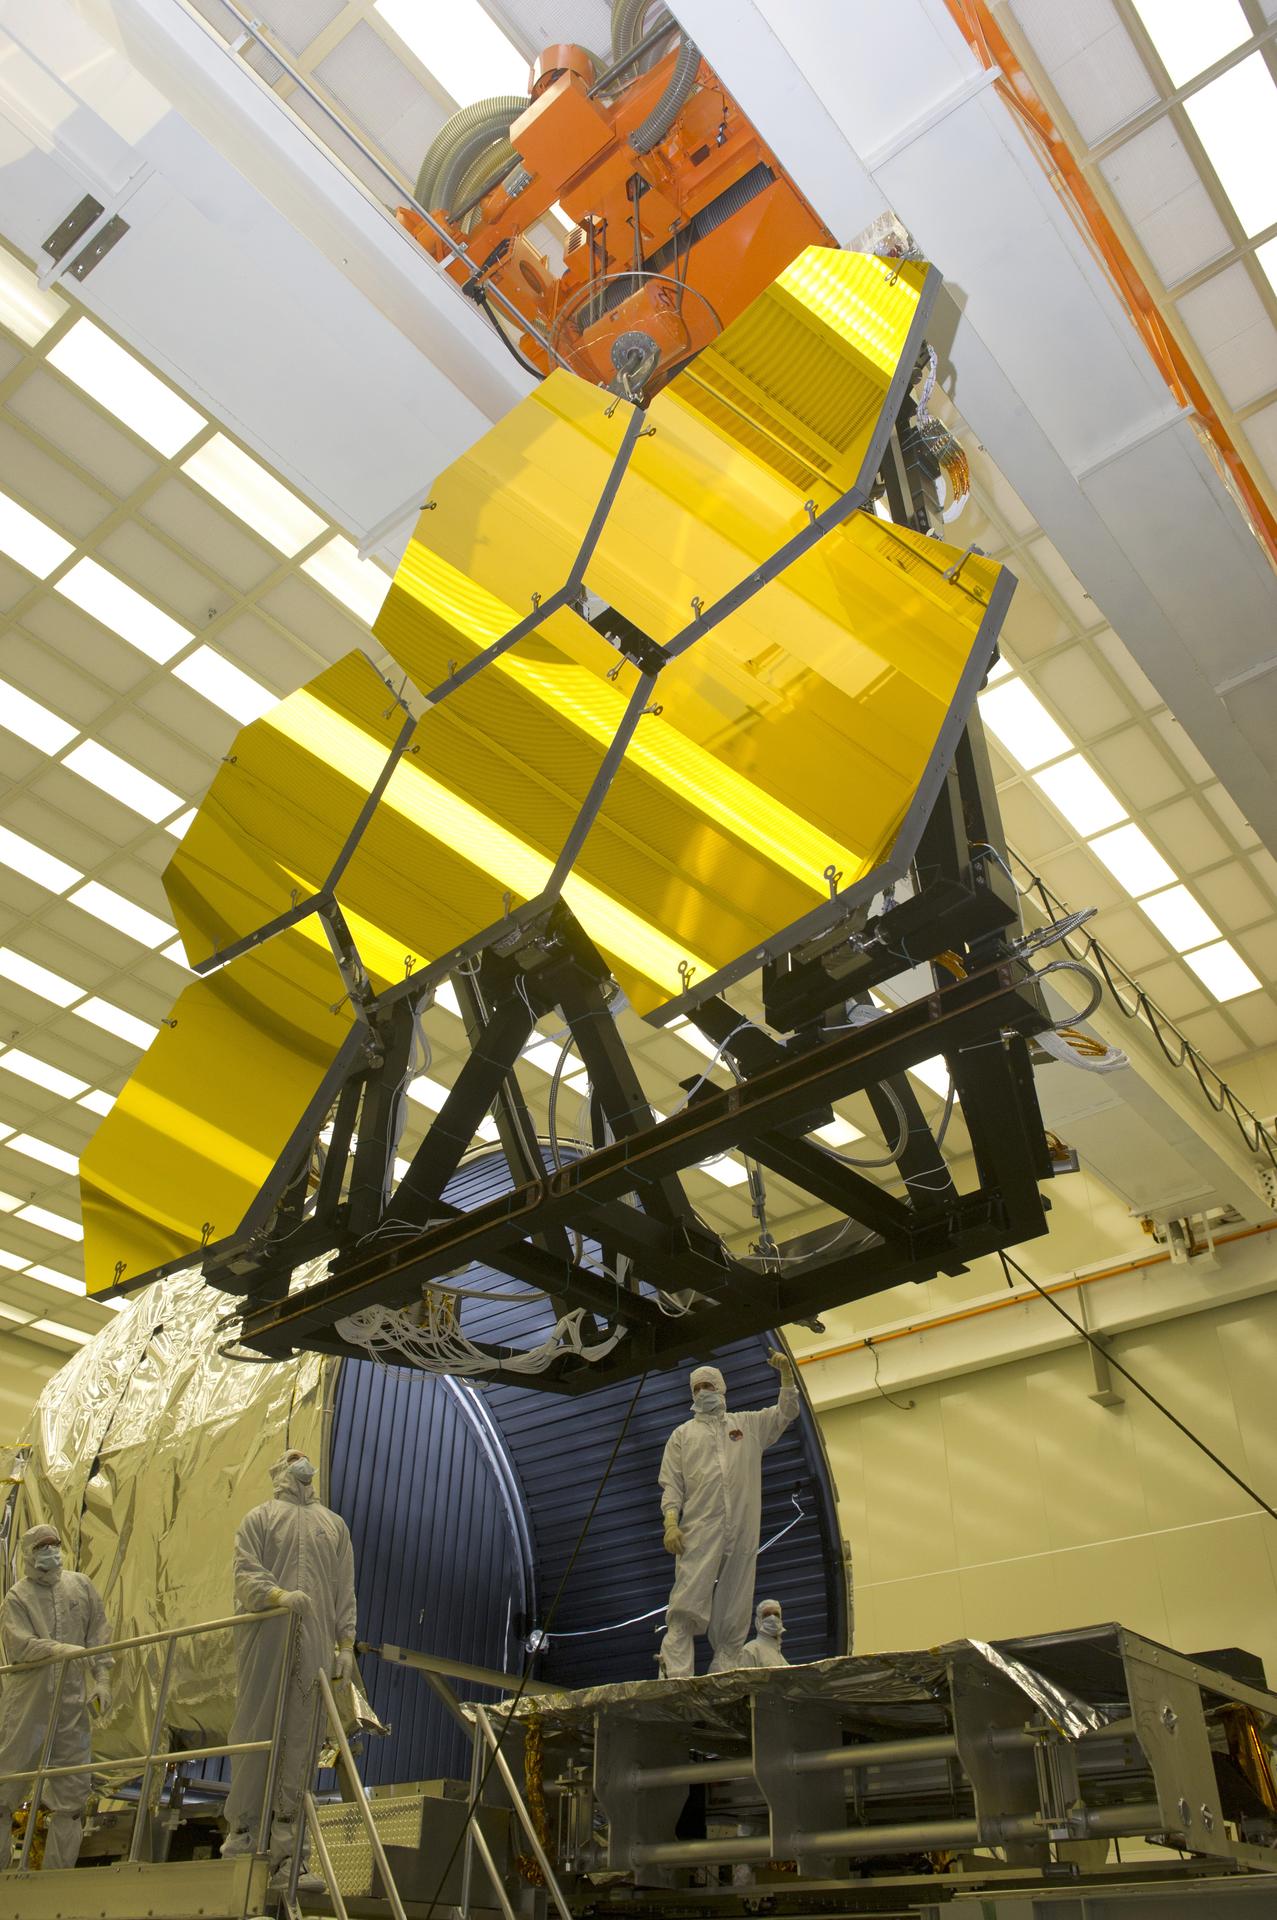 Webb’s telescope mirrors were tested in NASA Marshall’s X-ray and Cryogenic Facility